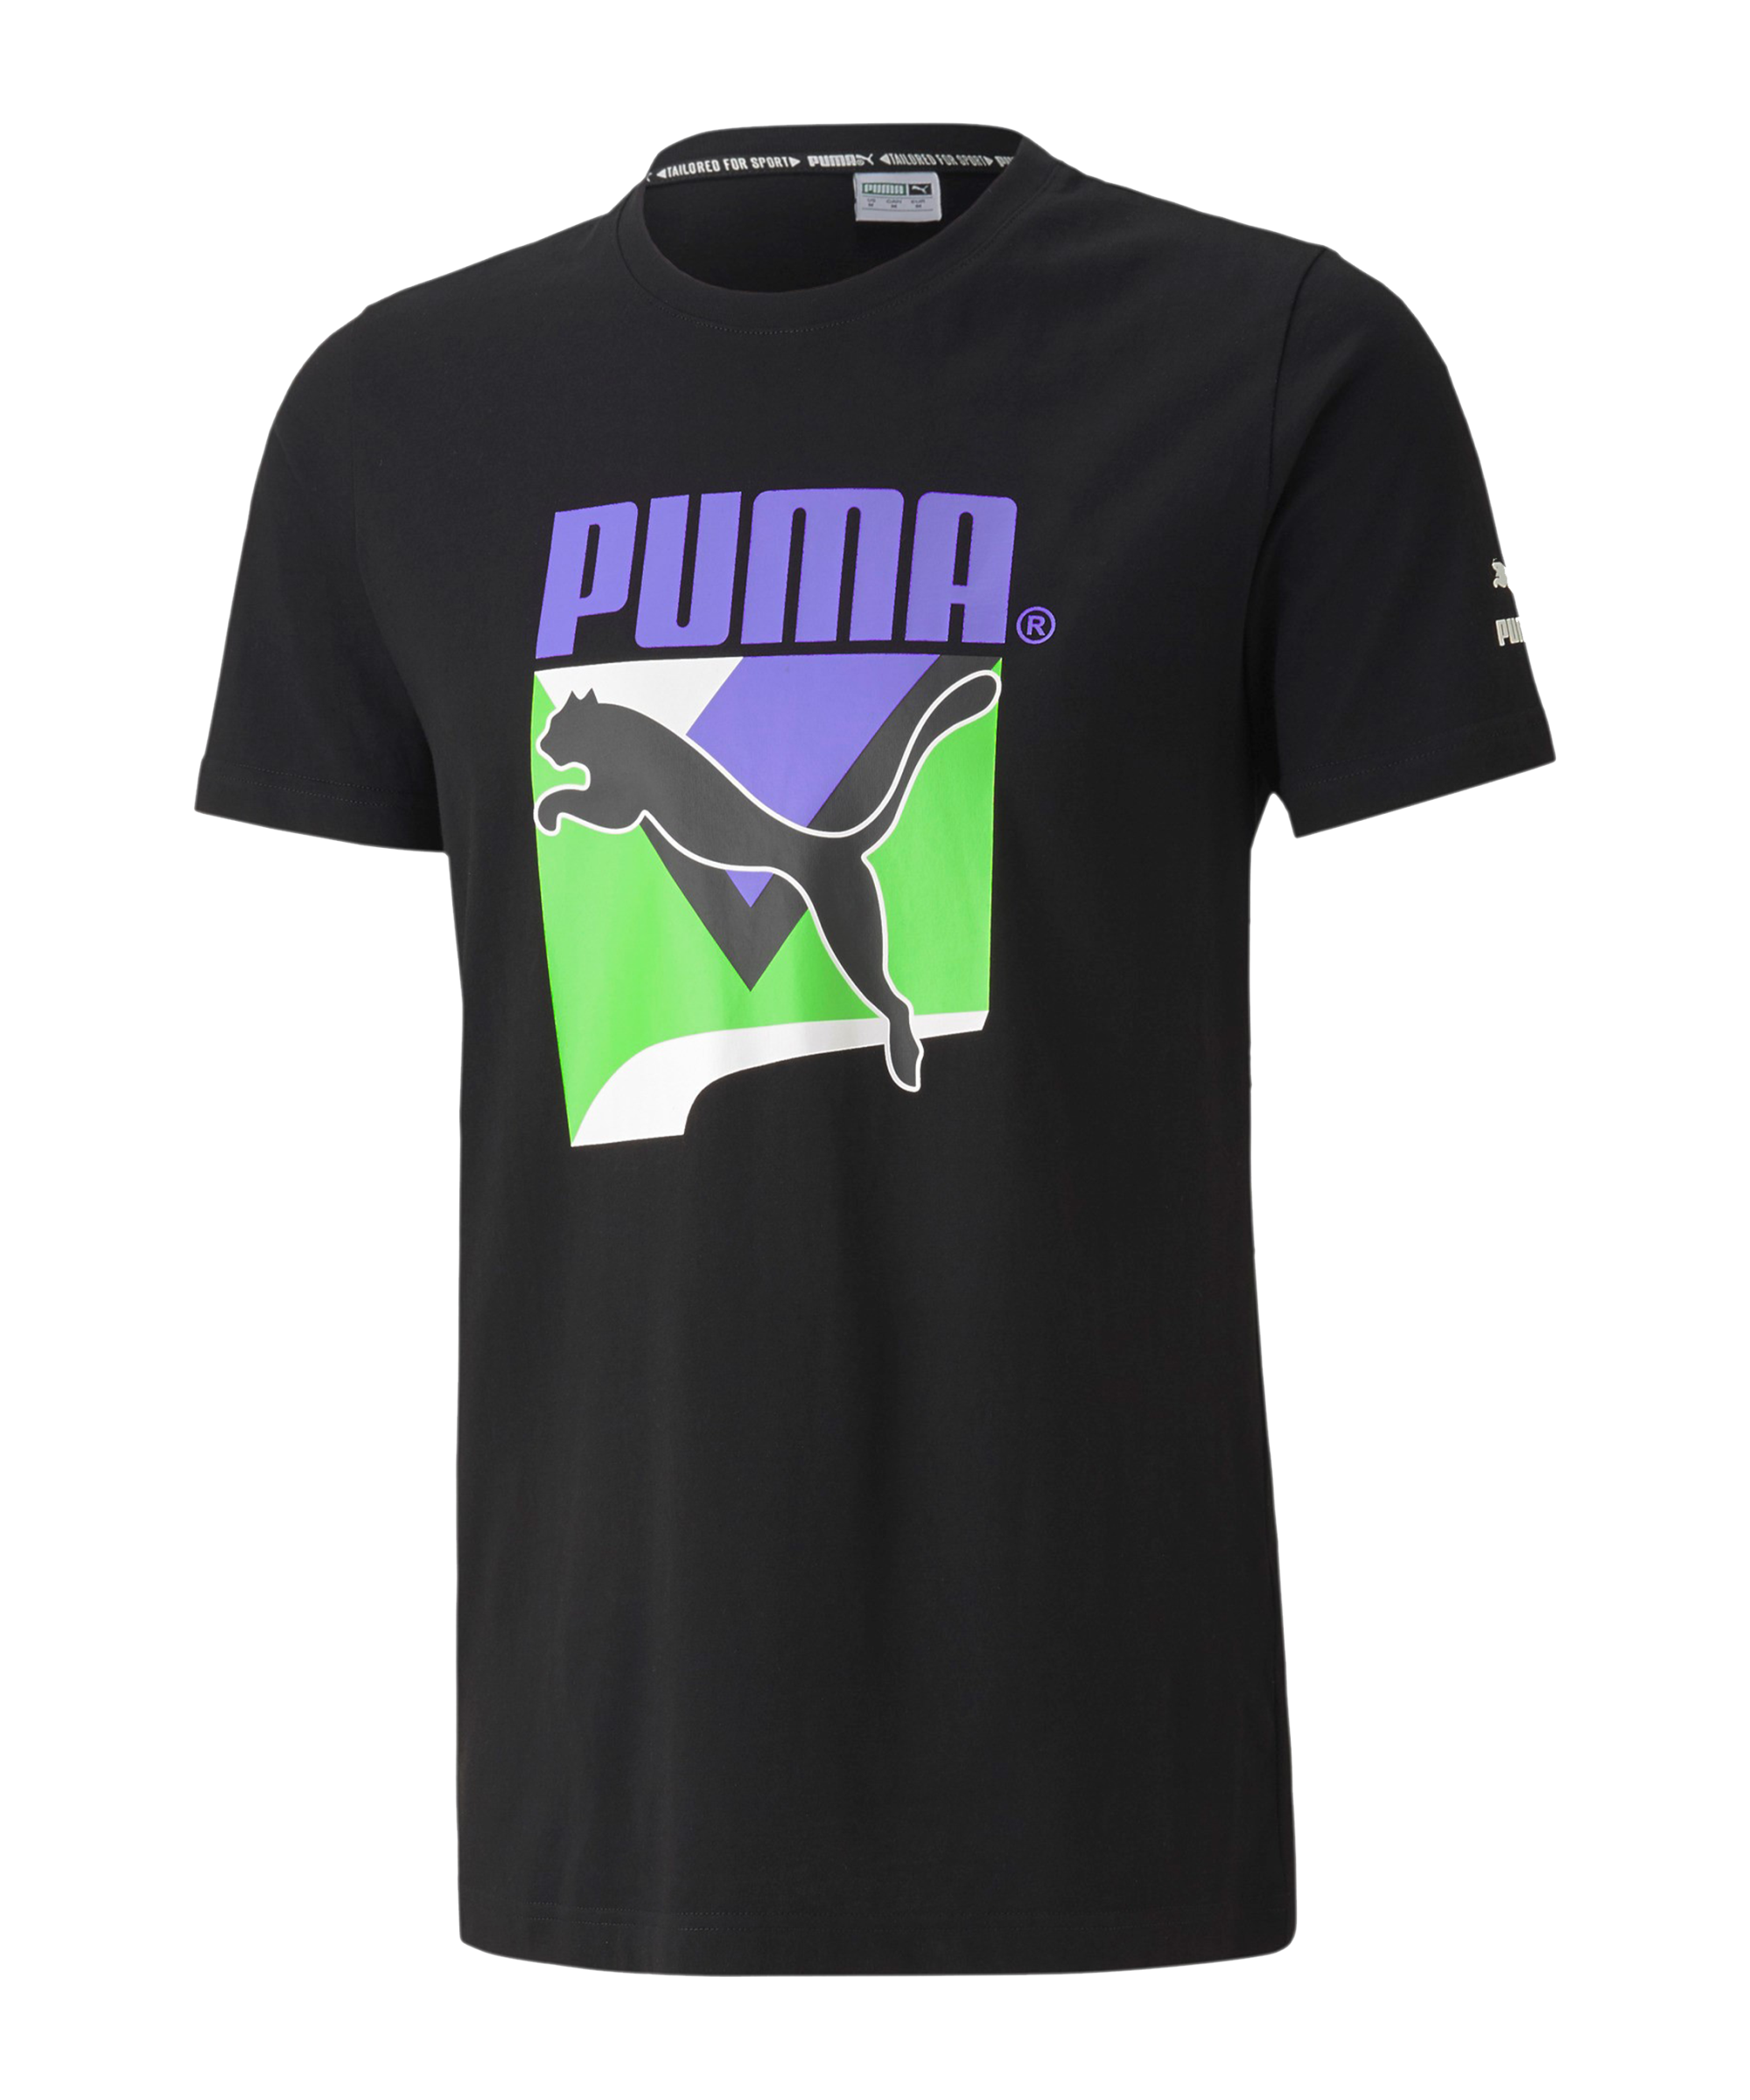 PUMA Graphic Tee T-Shirt - Black